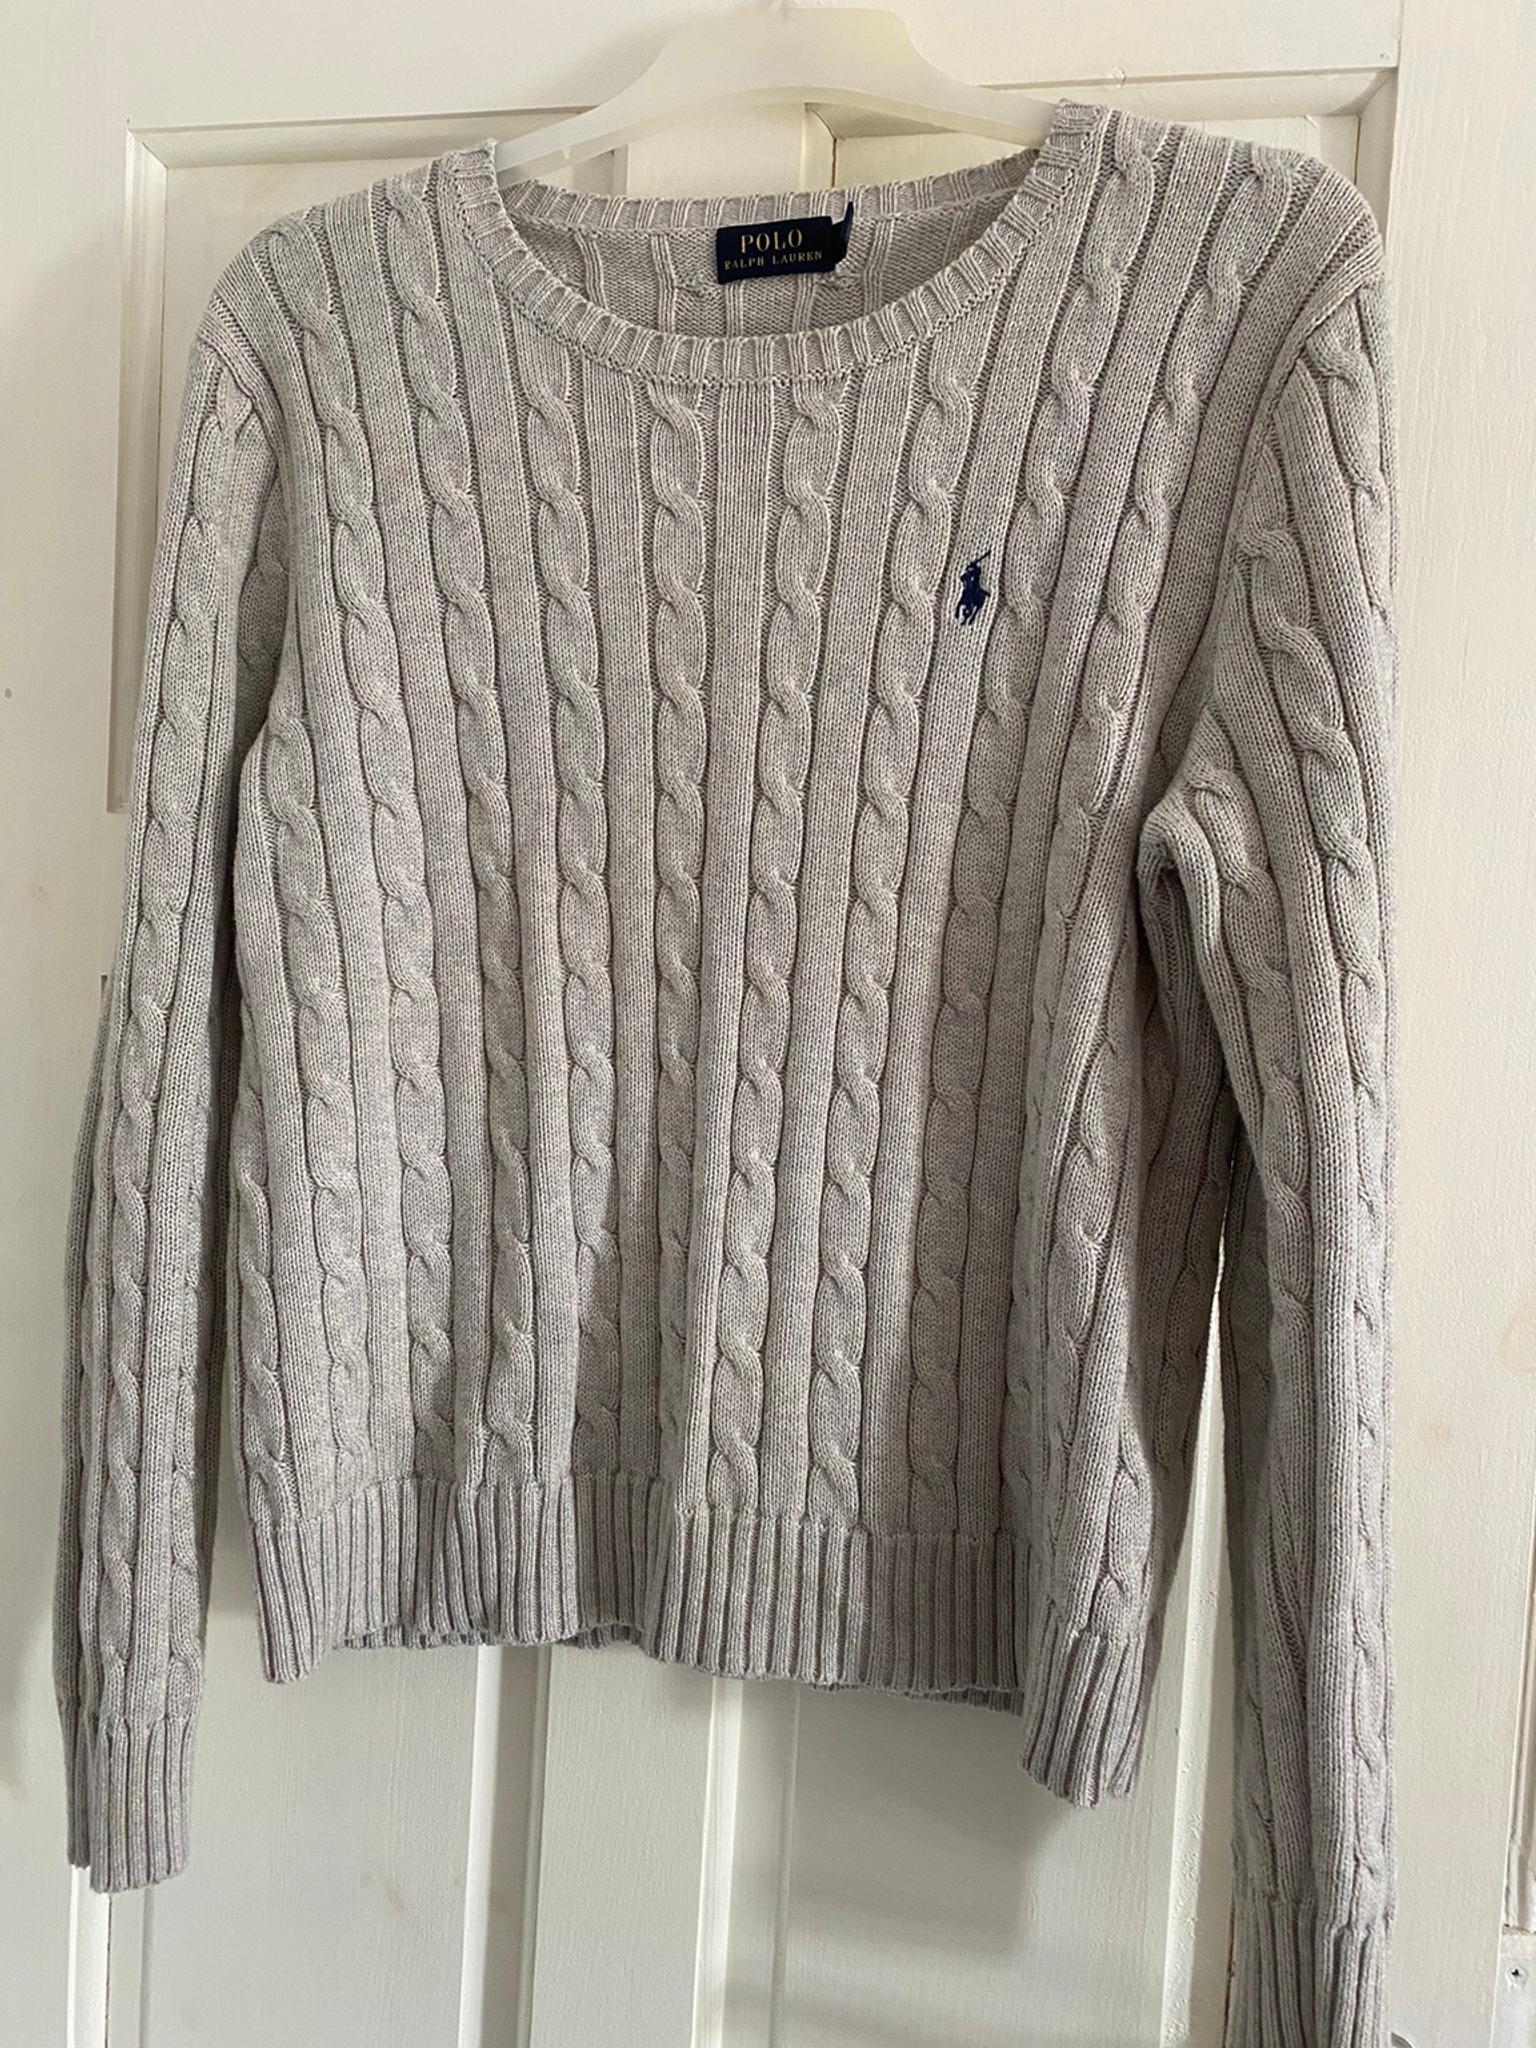 ralph lauren grey cable knit jumper